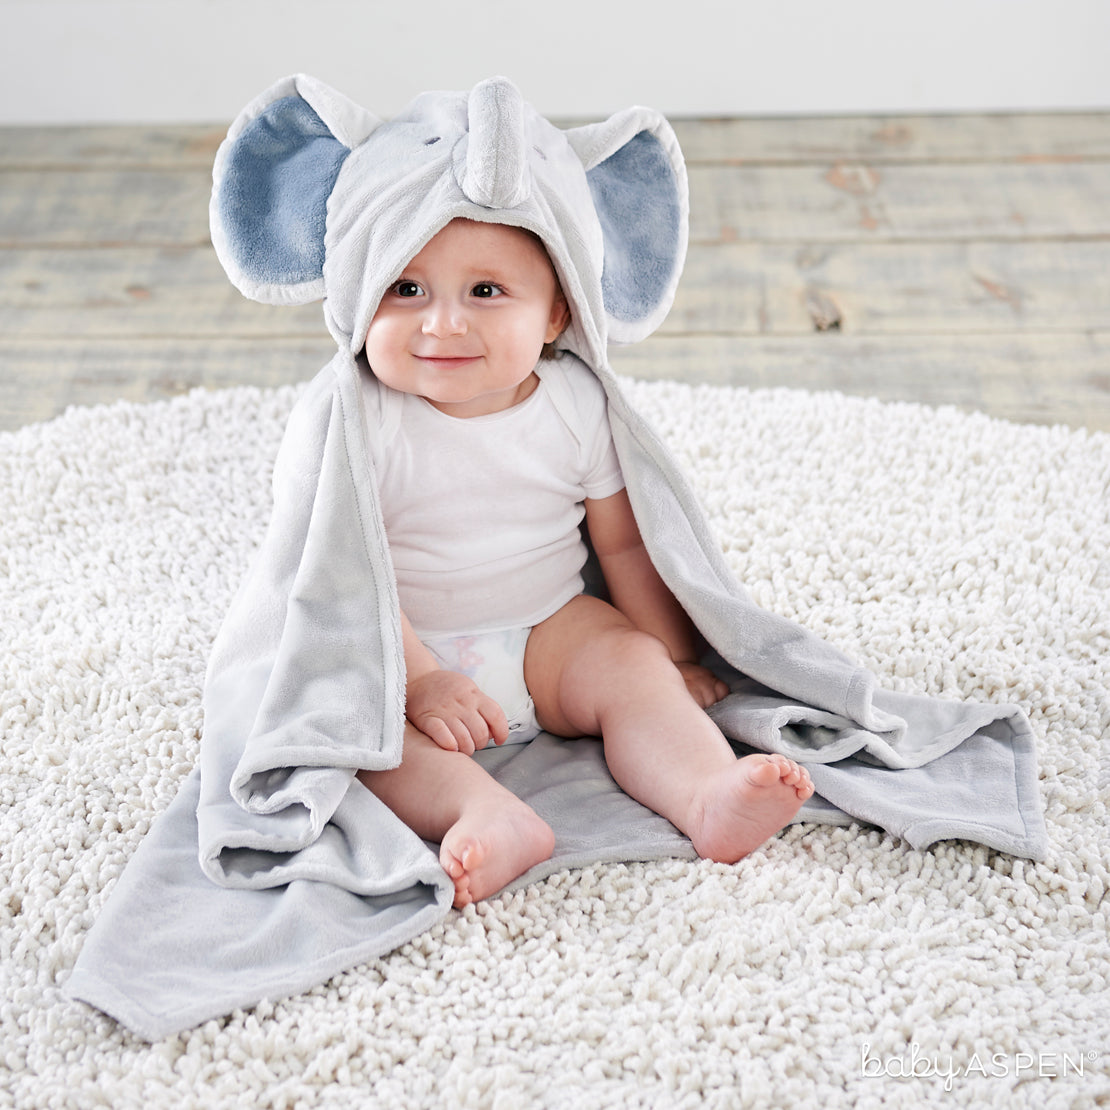 Little Peanut Elephant Hooded Blanket | Cozy Blankets & Lovies to Warm Baby this Winter | Baby Aspen